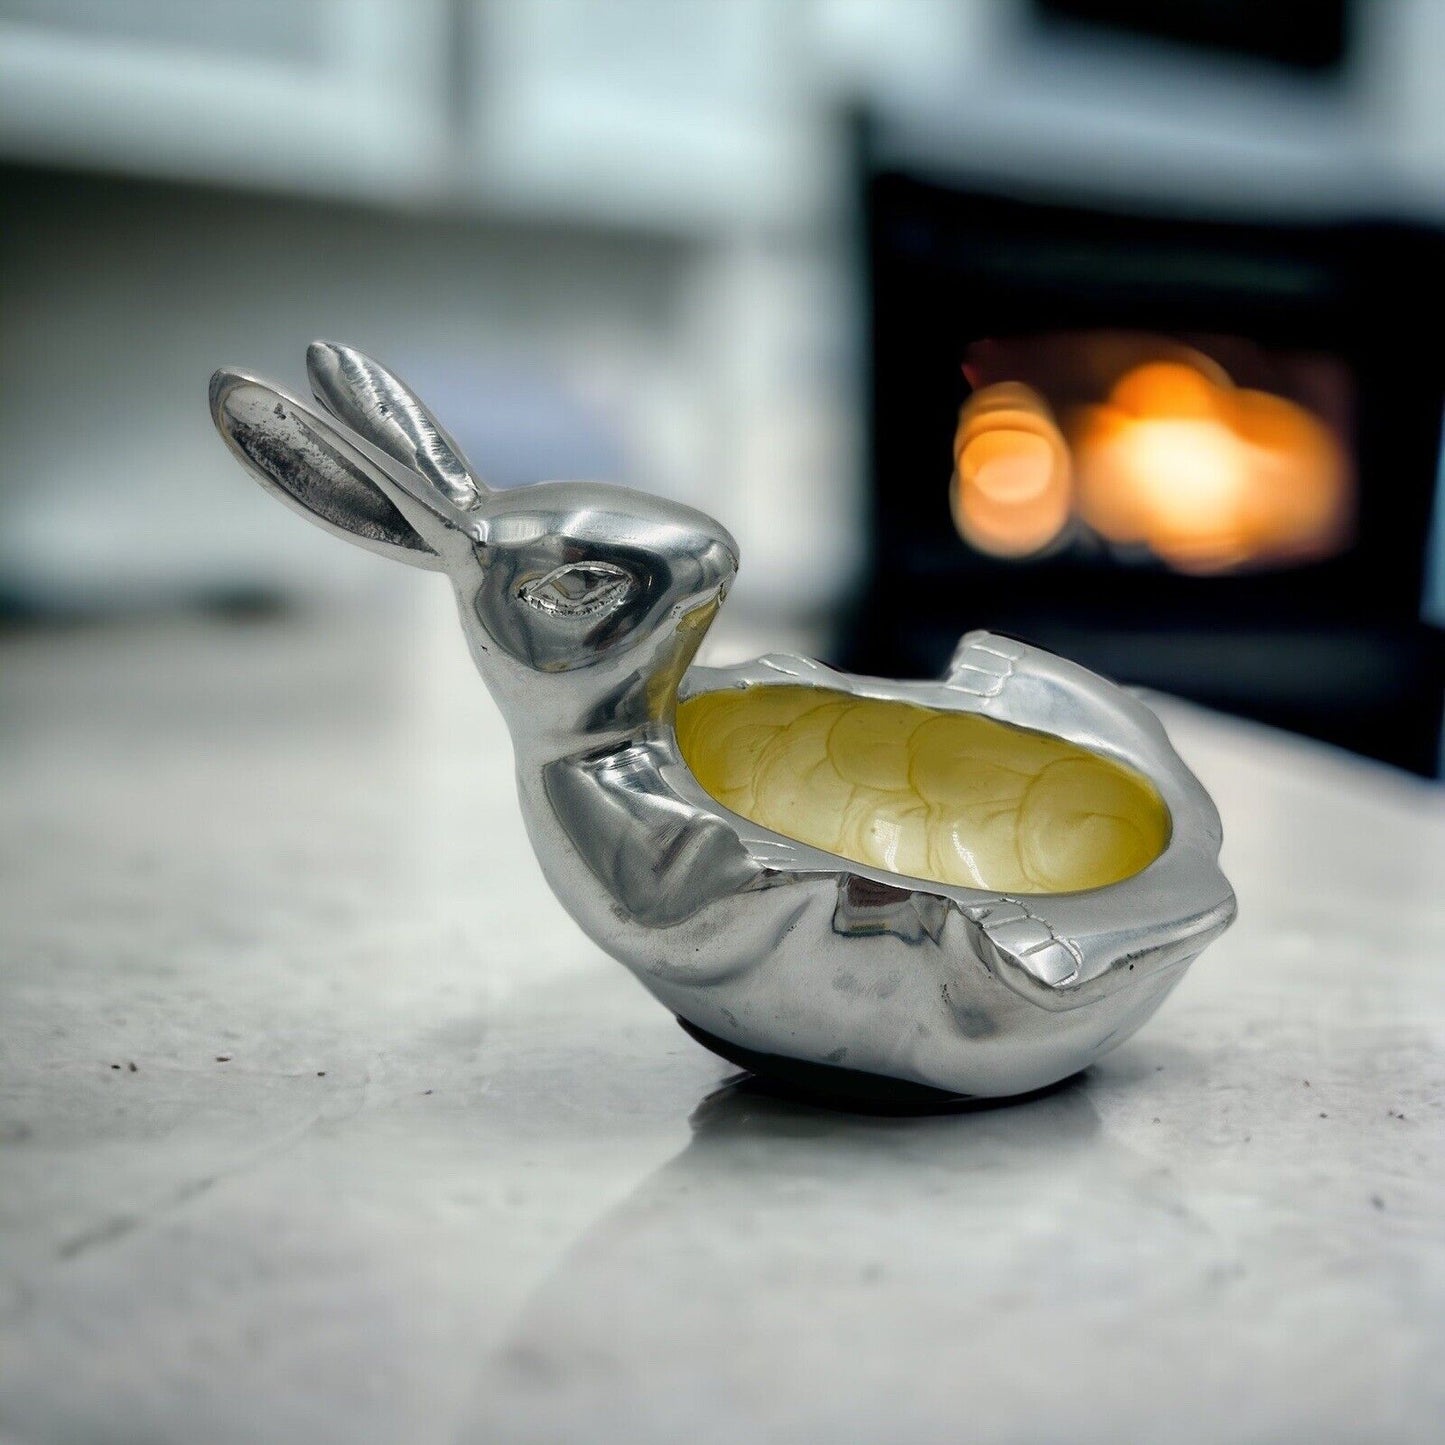 Bunny Rabbit Enameled Aluminum Easter Bowl Candy Nut  9” x 6” Seasonal Decor